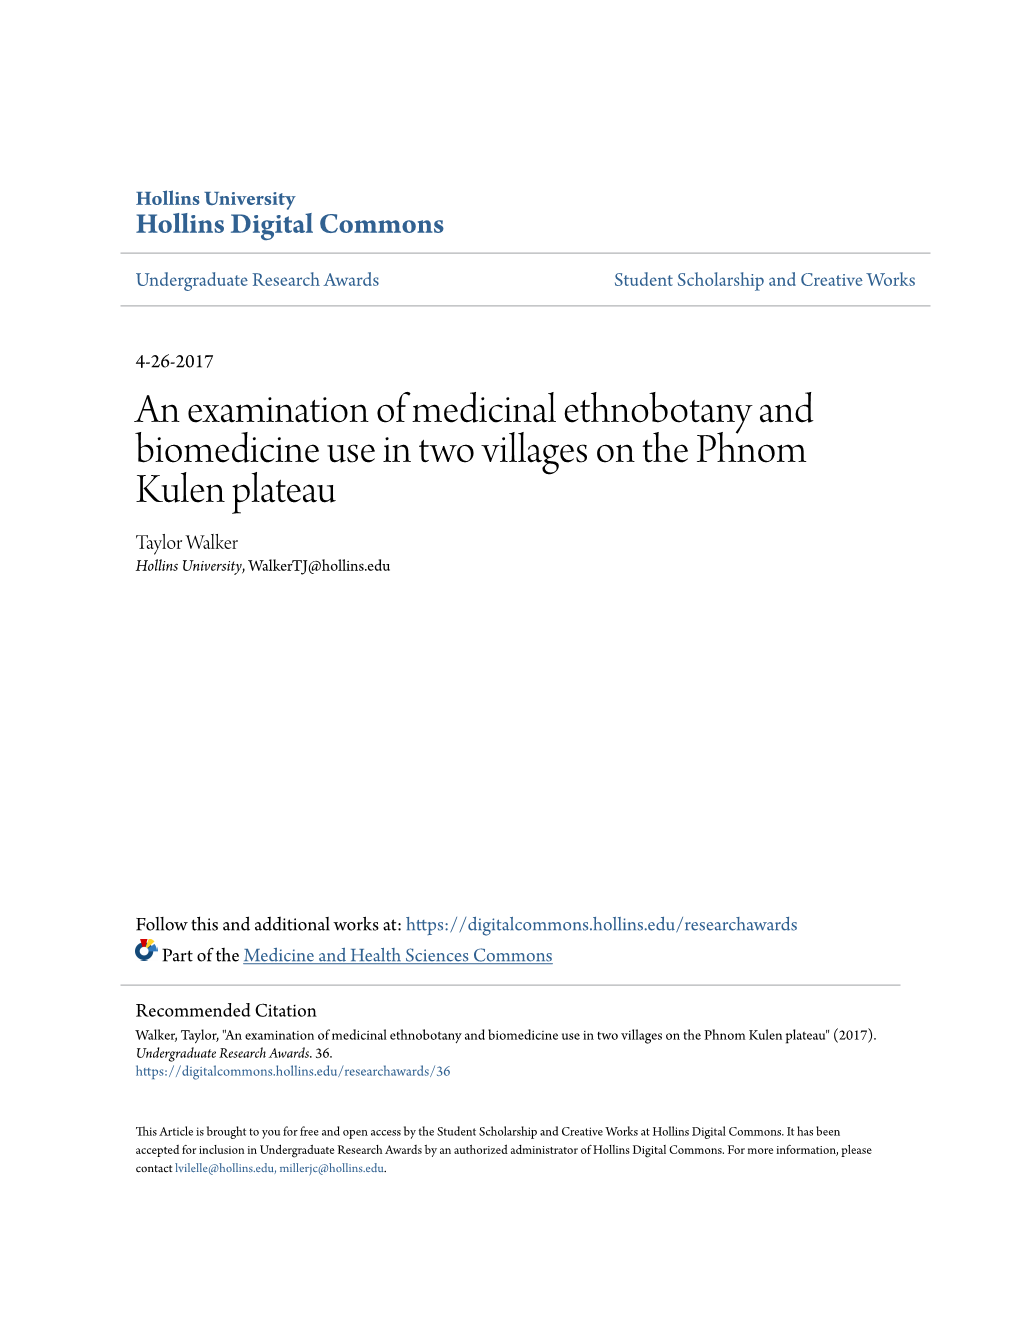 An Examination of Medicinal Ethnobotany and Biomedicine Use in Two Villages on the Phnom Kulen Plateau Taylor Walker Hollins University, Walkertj@Hollins.Edu